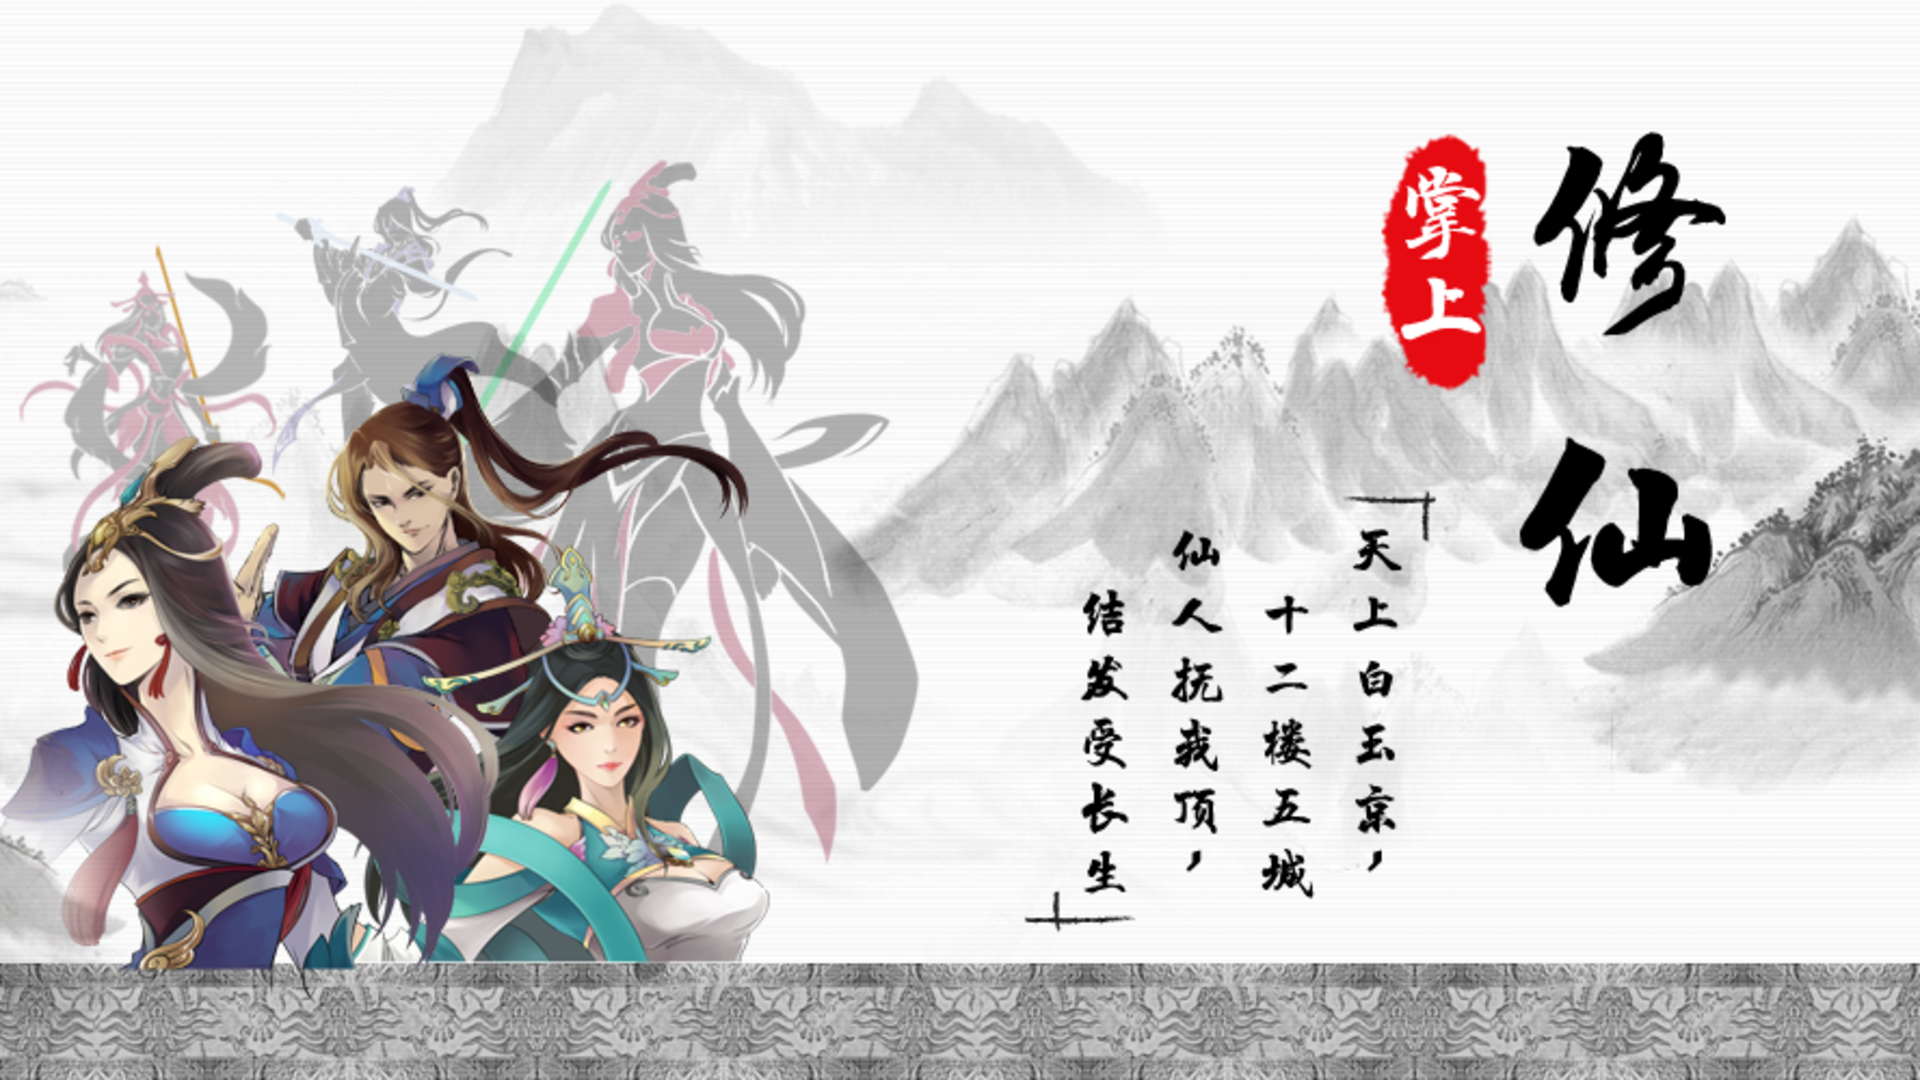 Banner of 手栽培 1.92